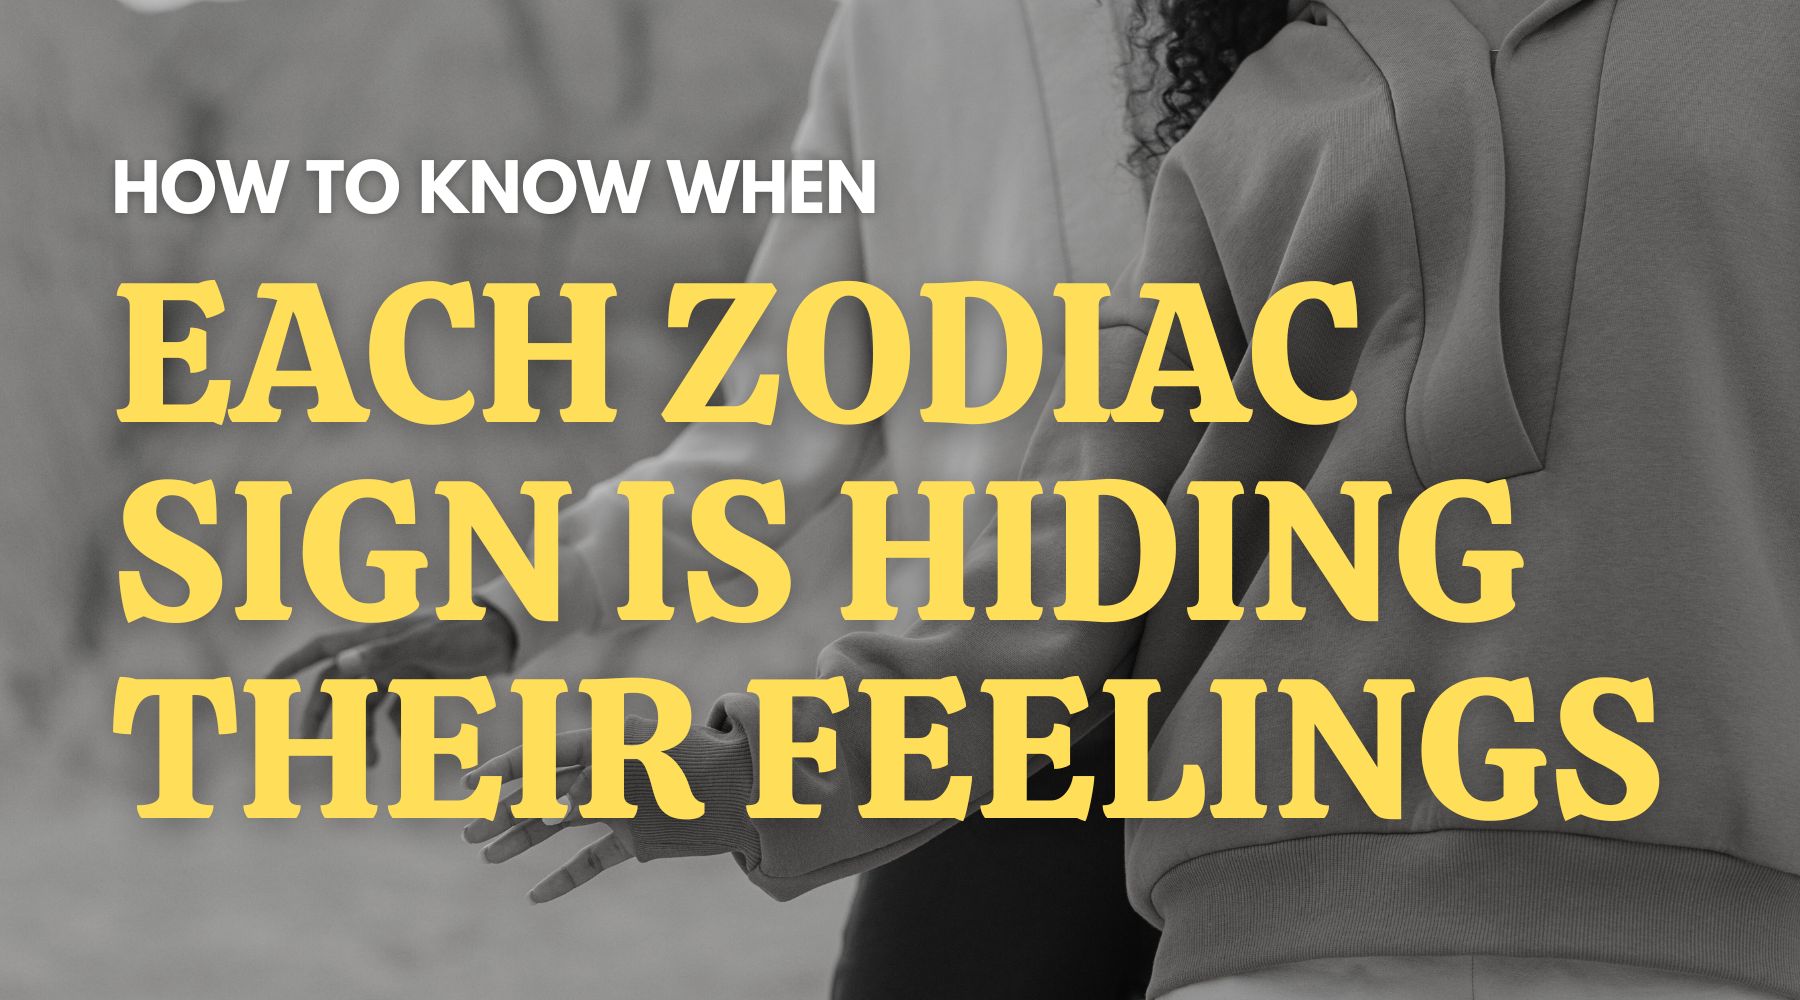 How each zodiac sign is hiding their feelings for you